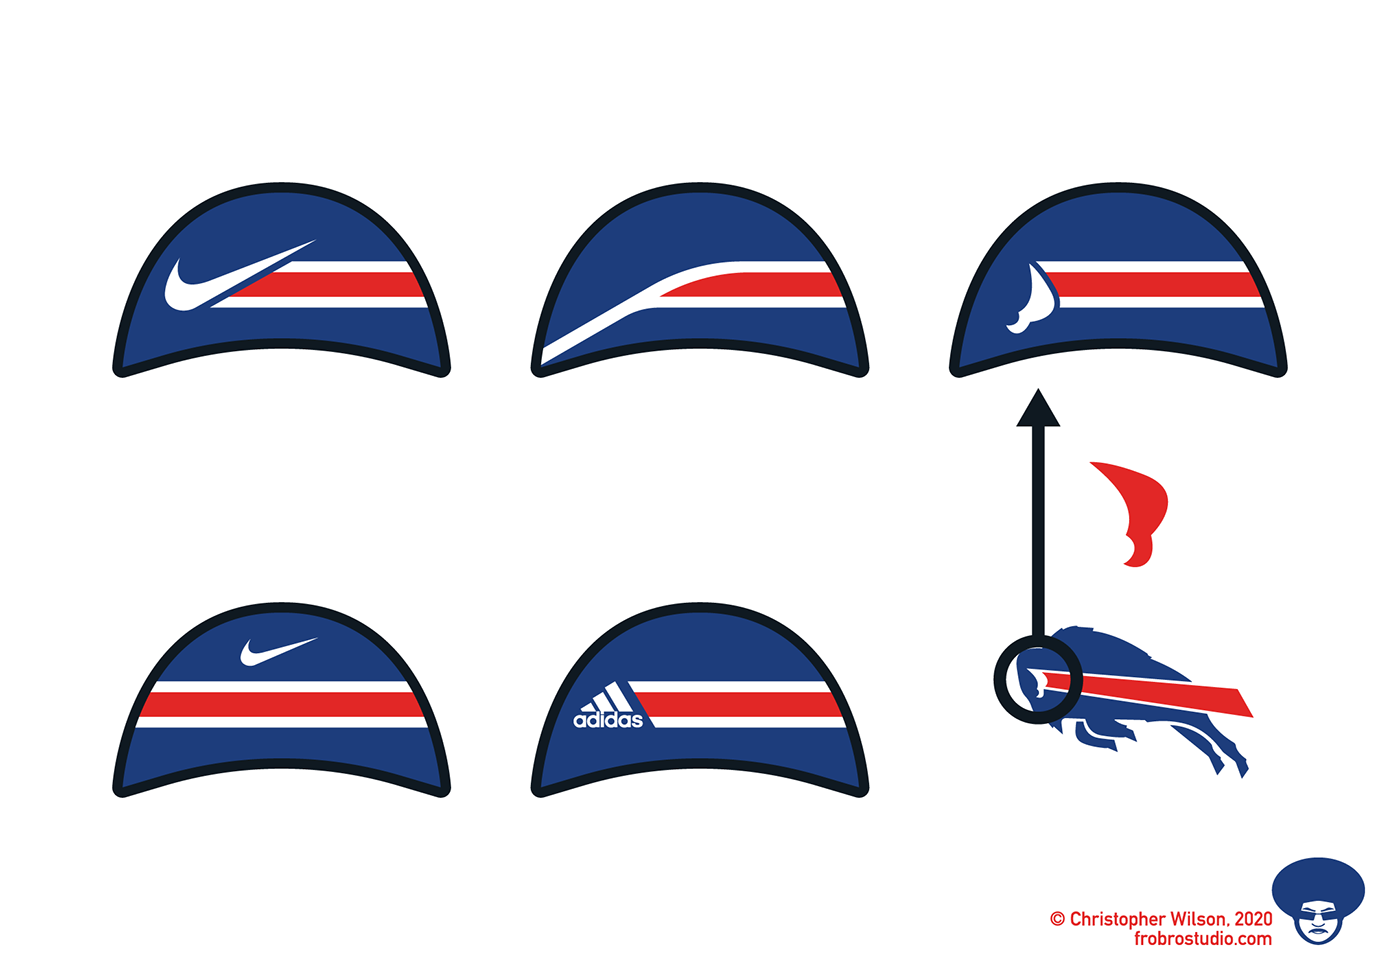 My Dallas Cowboys Uniform Concept Desgin - Concepts - Chris Creamer's  Sports Logos Community - CCSLC - SportsLogos.Net Forums